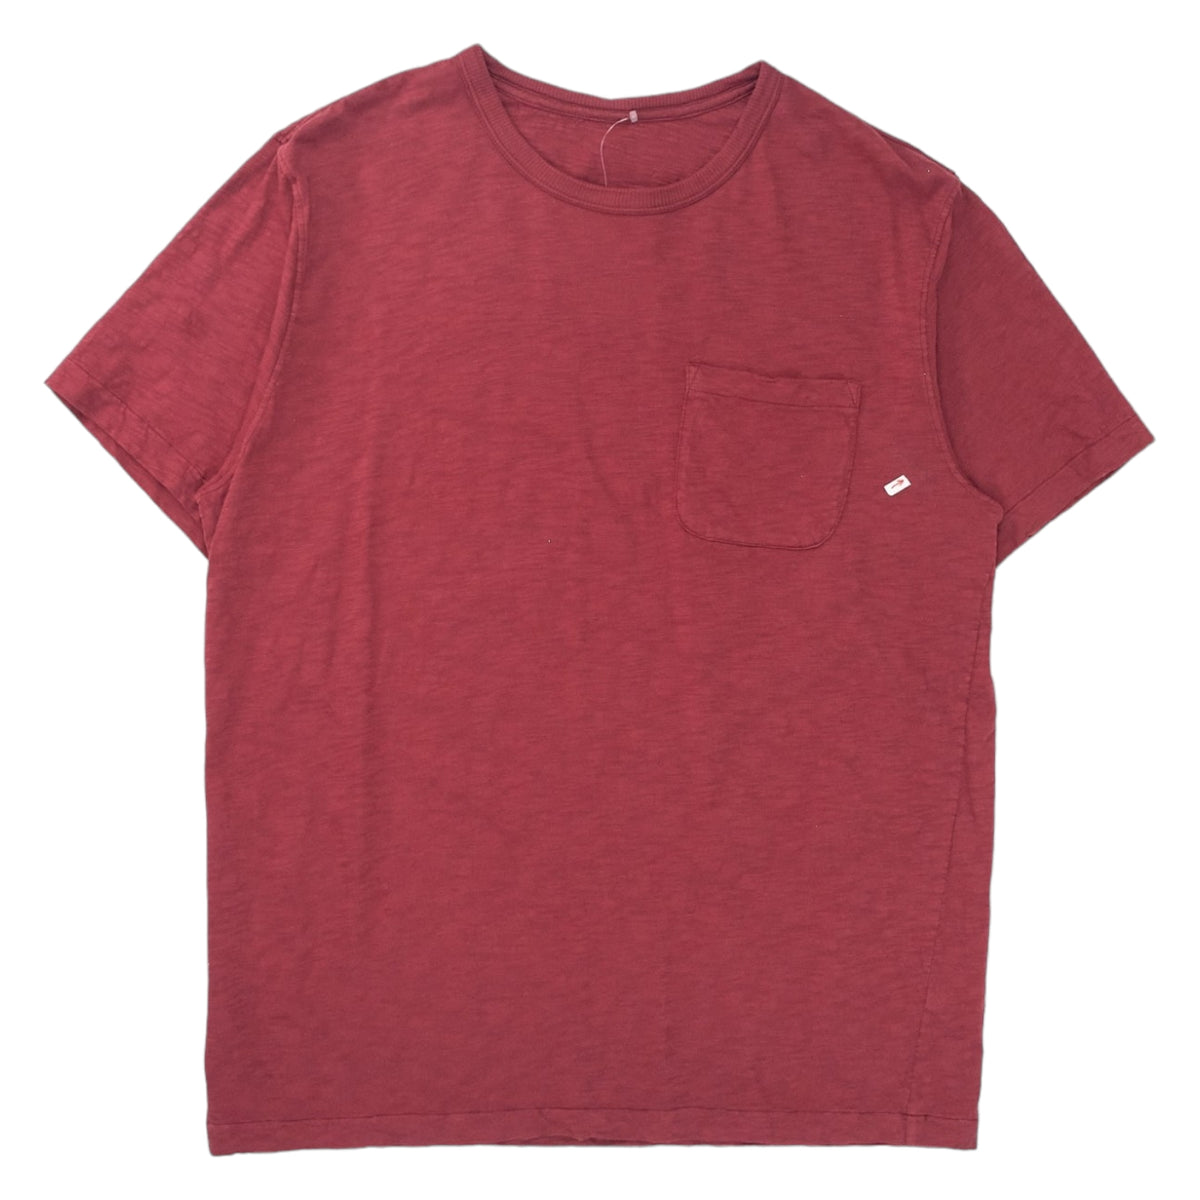 YMC Brick Red Pocket T Shirt